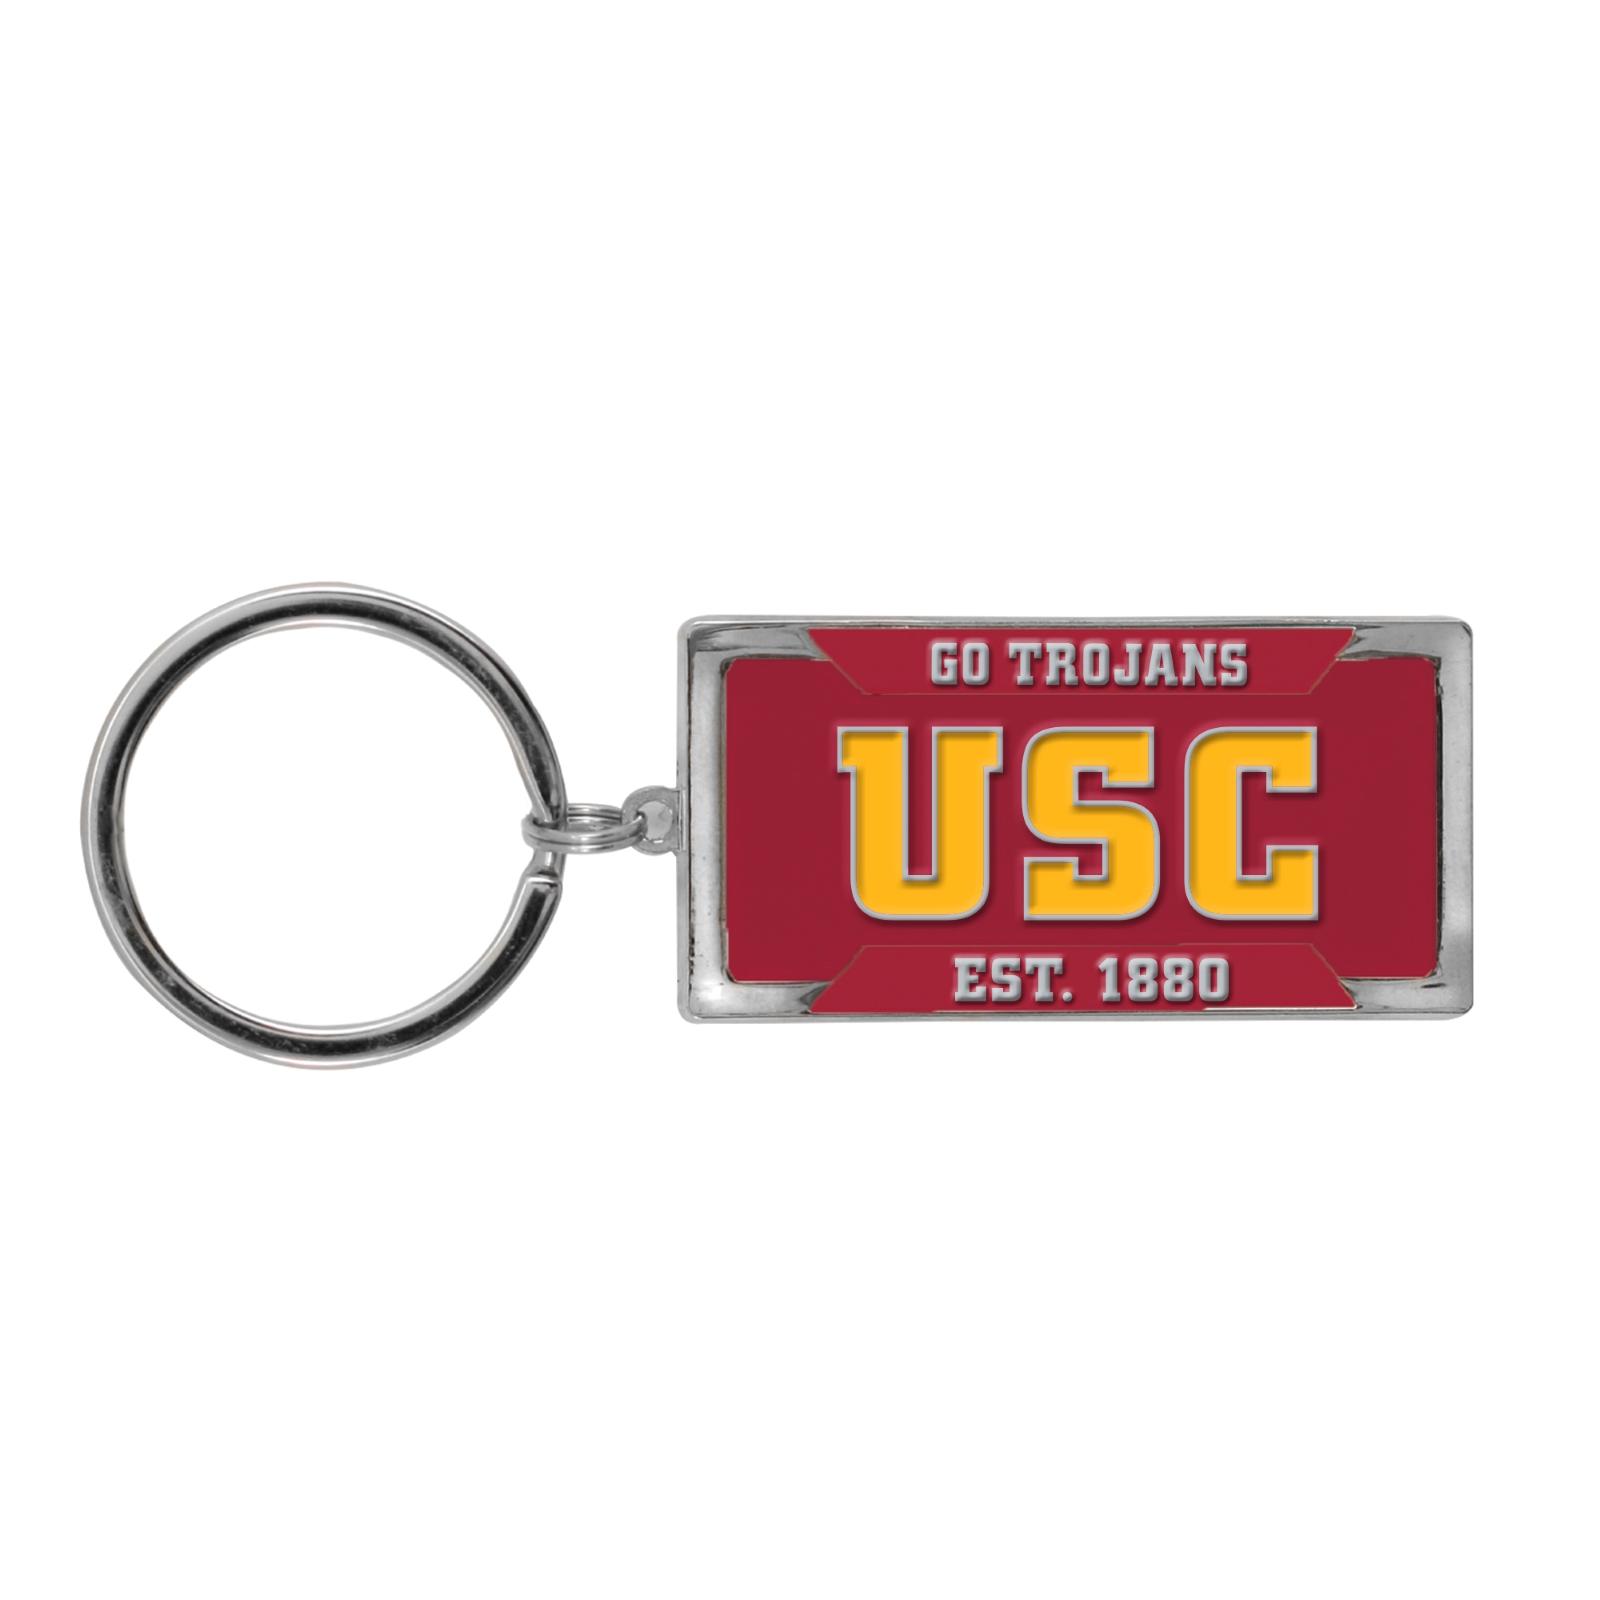 USC Trojans License Plate Keychain Cardinal by Spirit image01